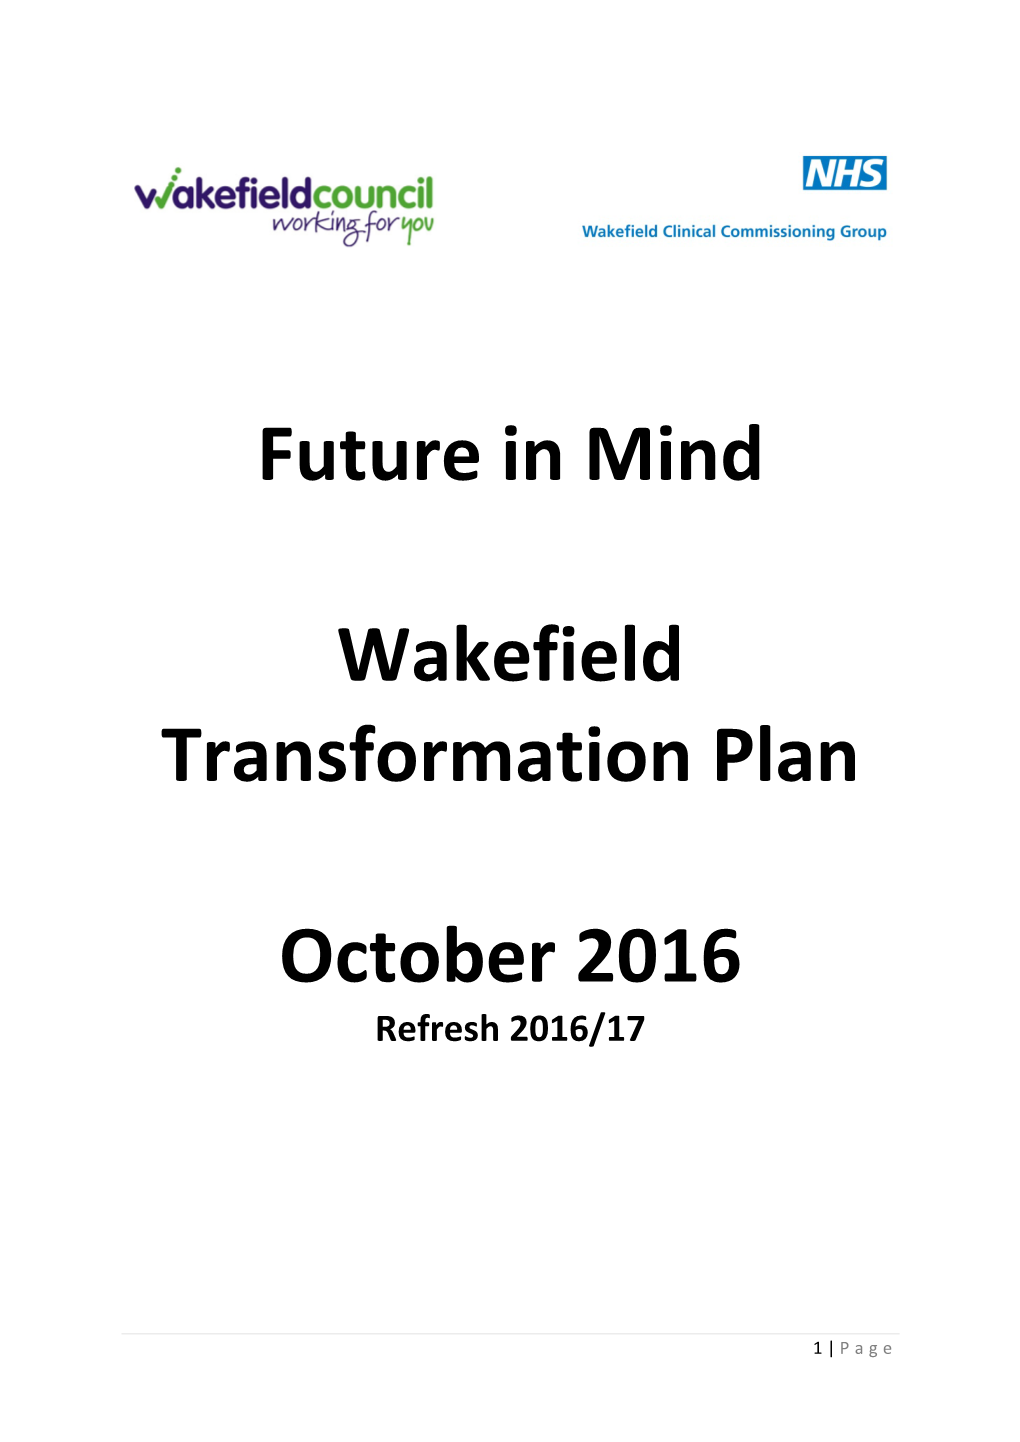 Wakefield Transformation Plan